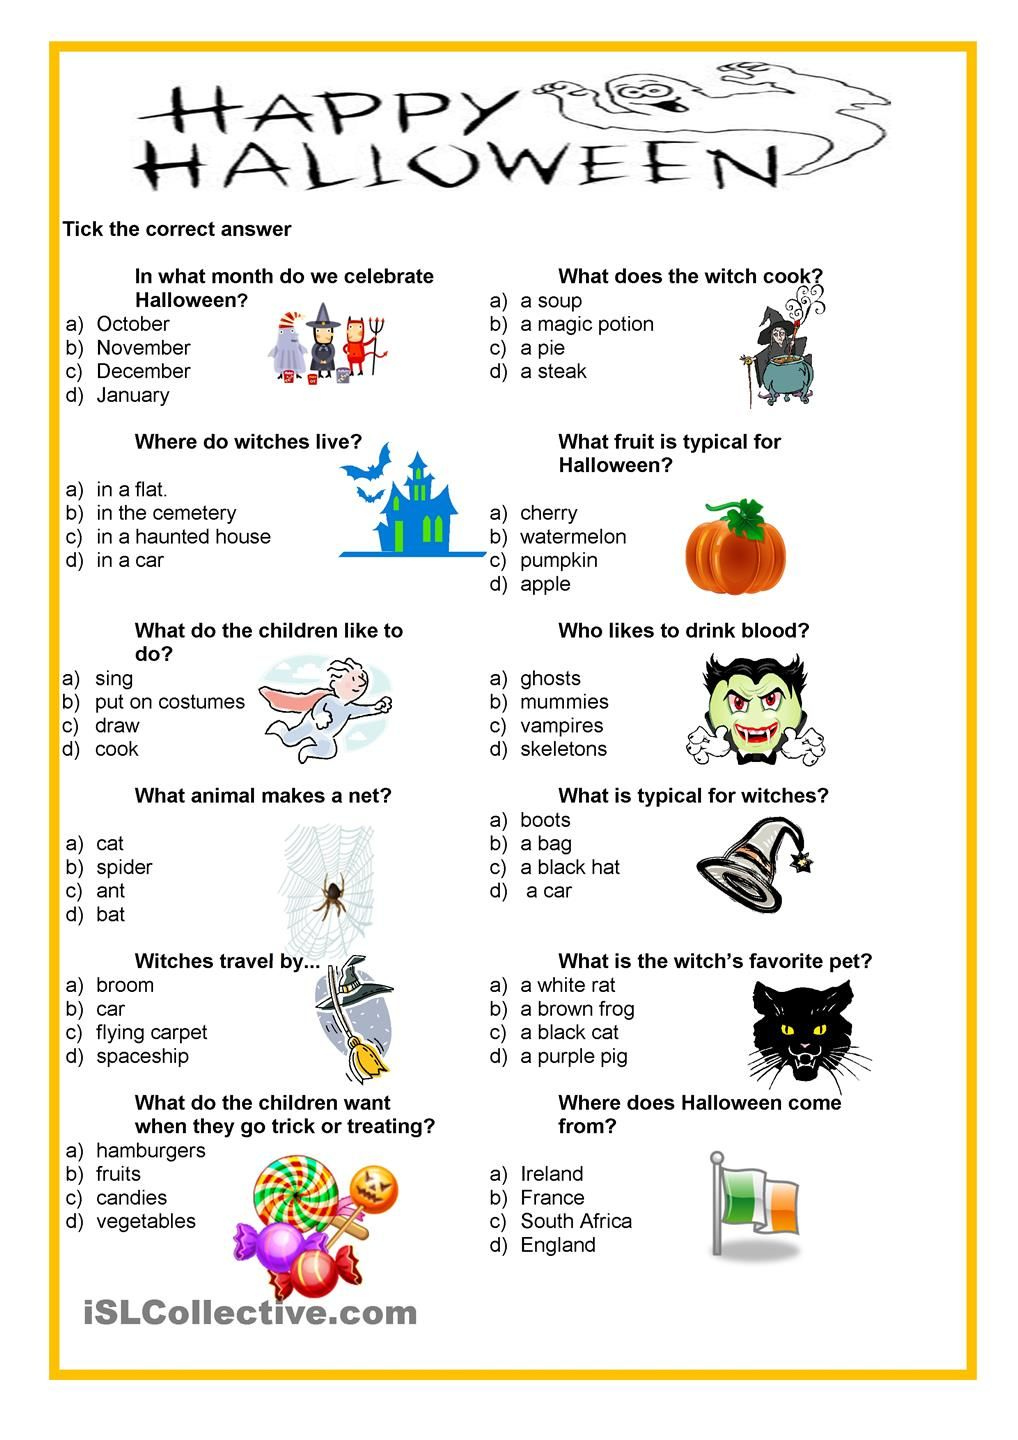 Happy Halloween Quiz With Images kola N m ina Angli tina